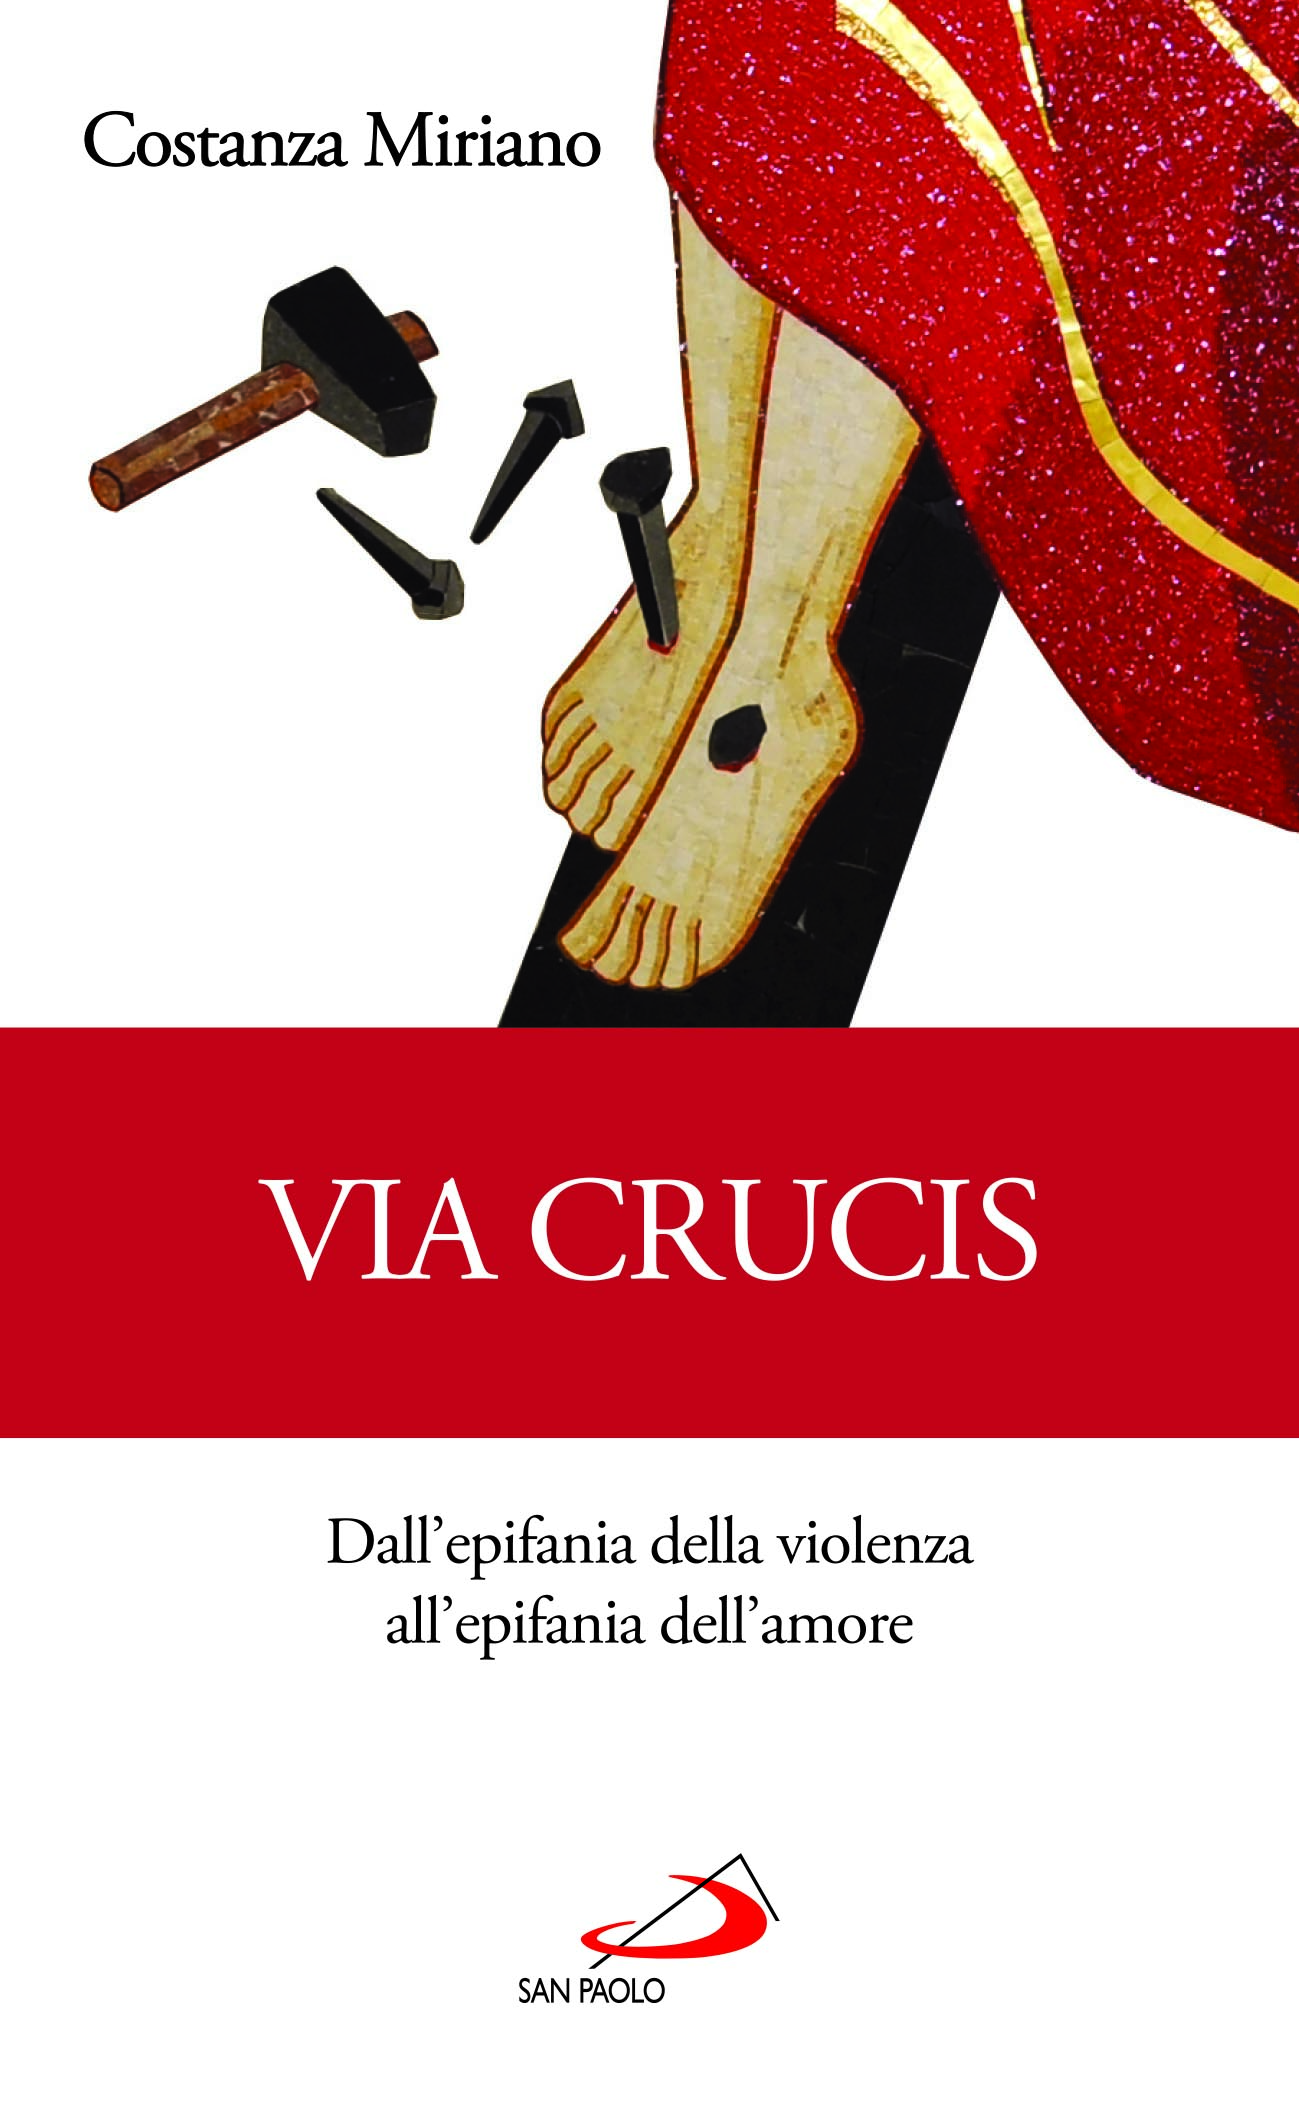 Cover Via Crucis MIRIANO.ai